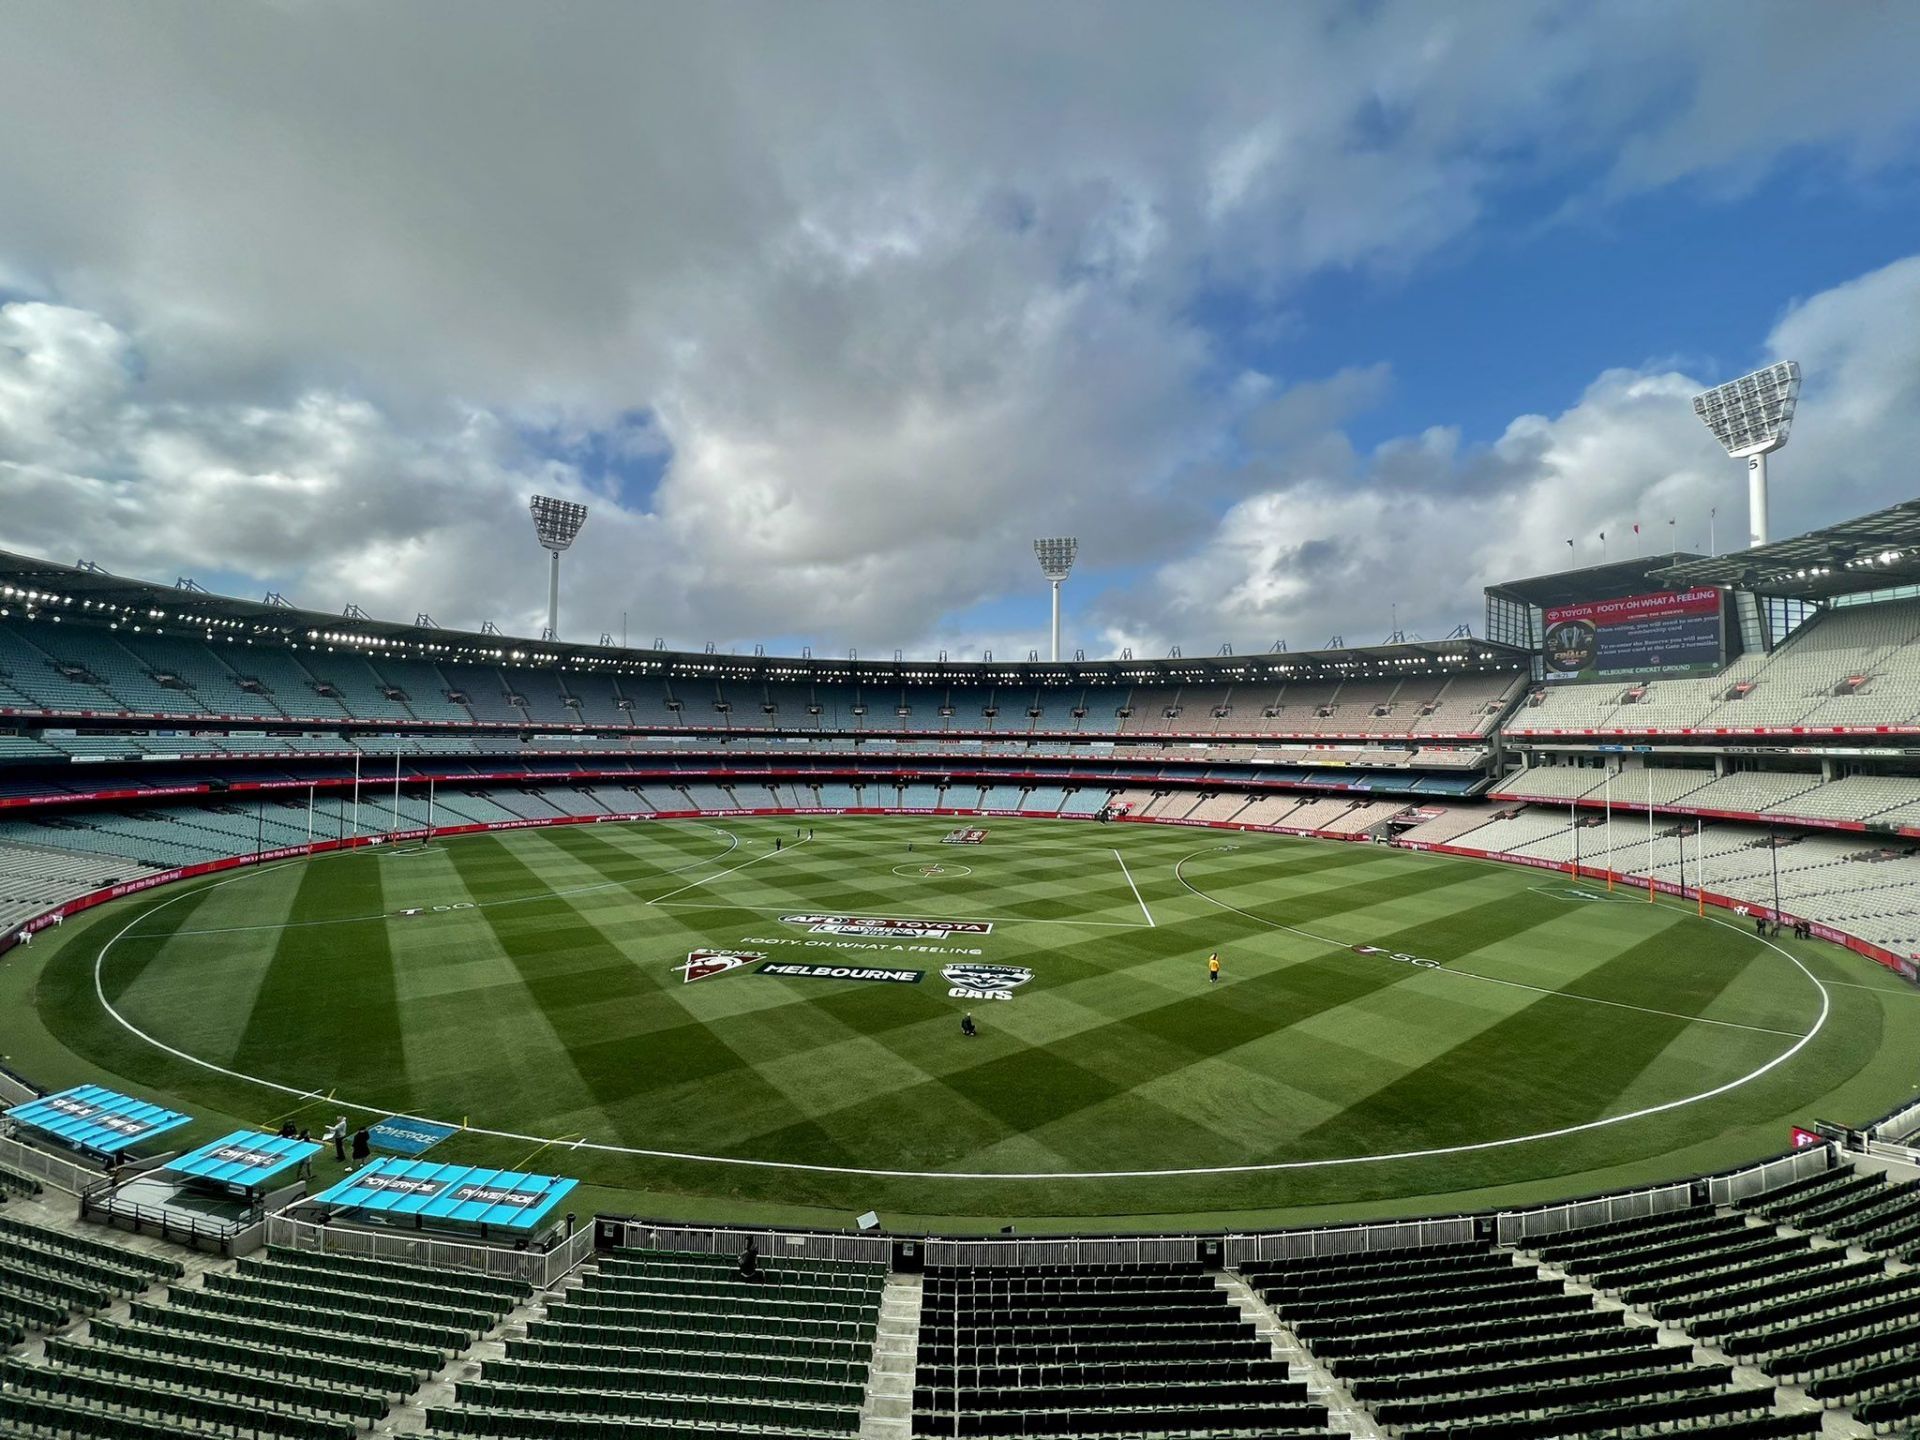 Melbourne Cricket Ground. (Image Credits: Twitter)